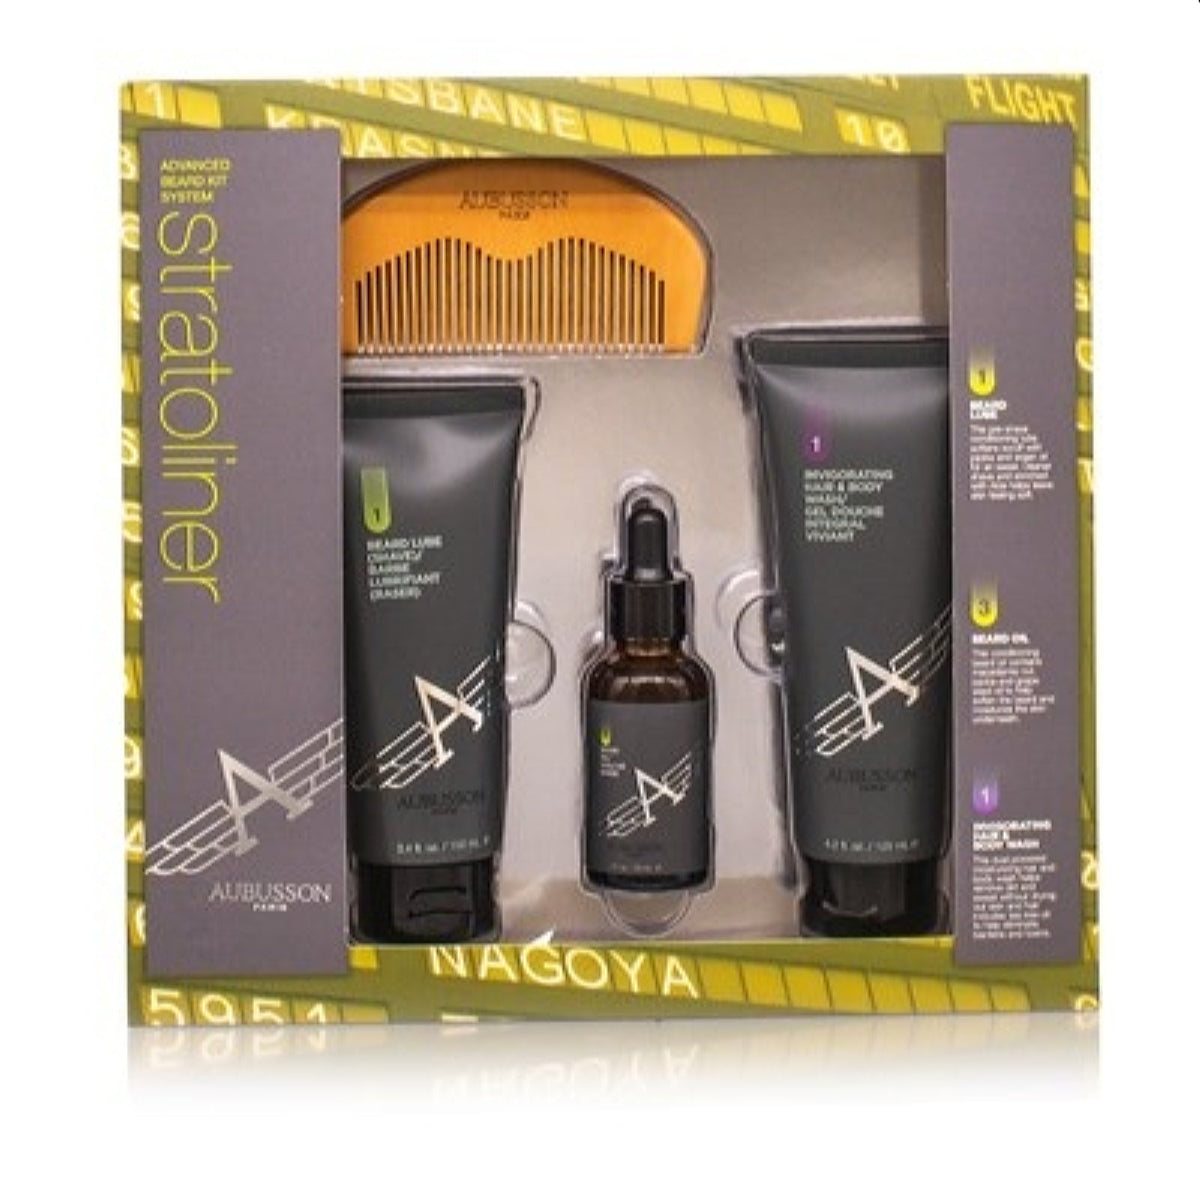 Aubusson Grooming Advanced Beard Kit System Aubusson Set For Men 04X1002